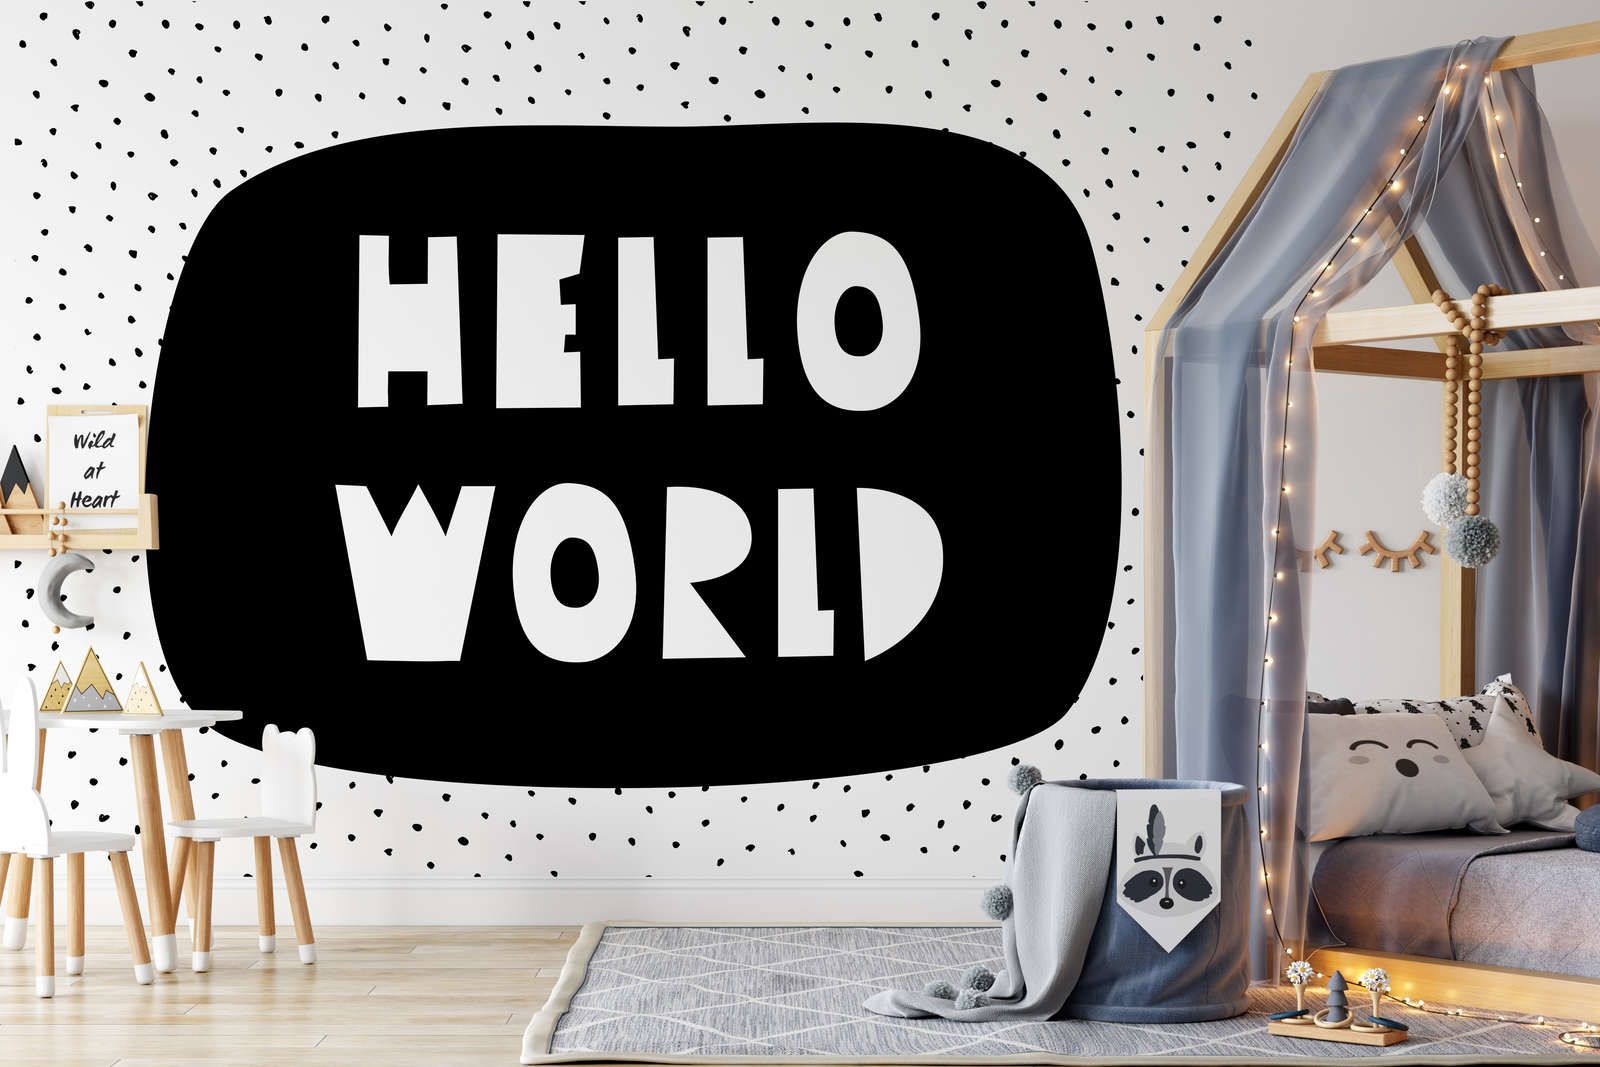             Photo wallpaper for children's room with lettering "Hello World" - Smooth & matt non-woven
        